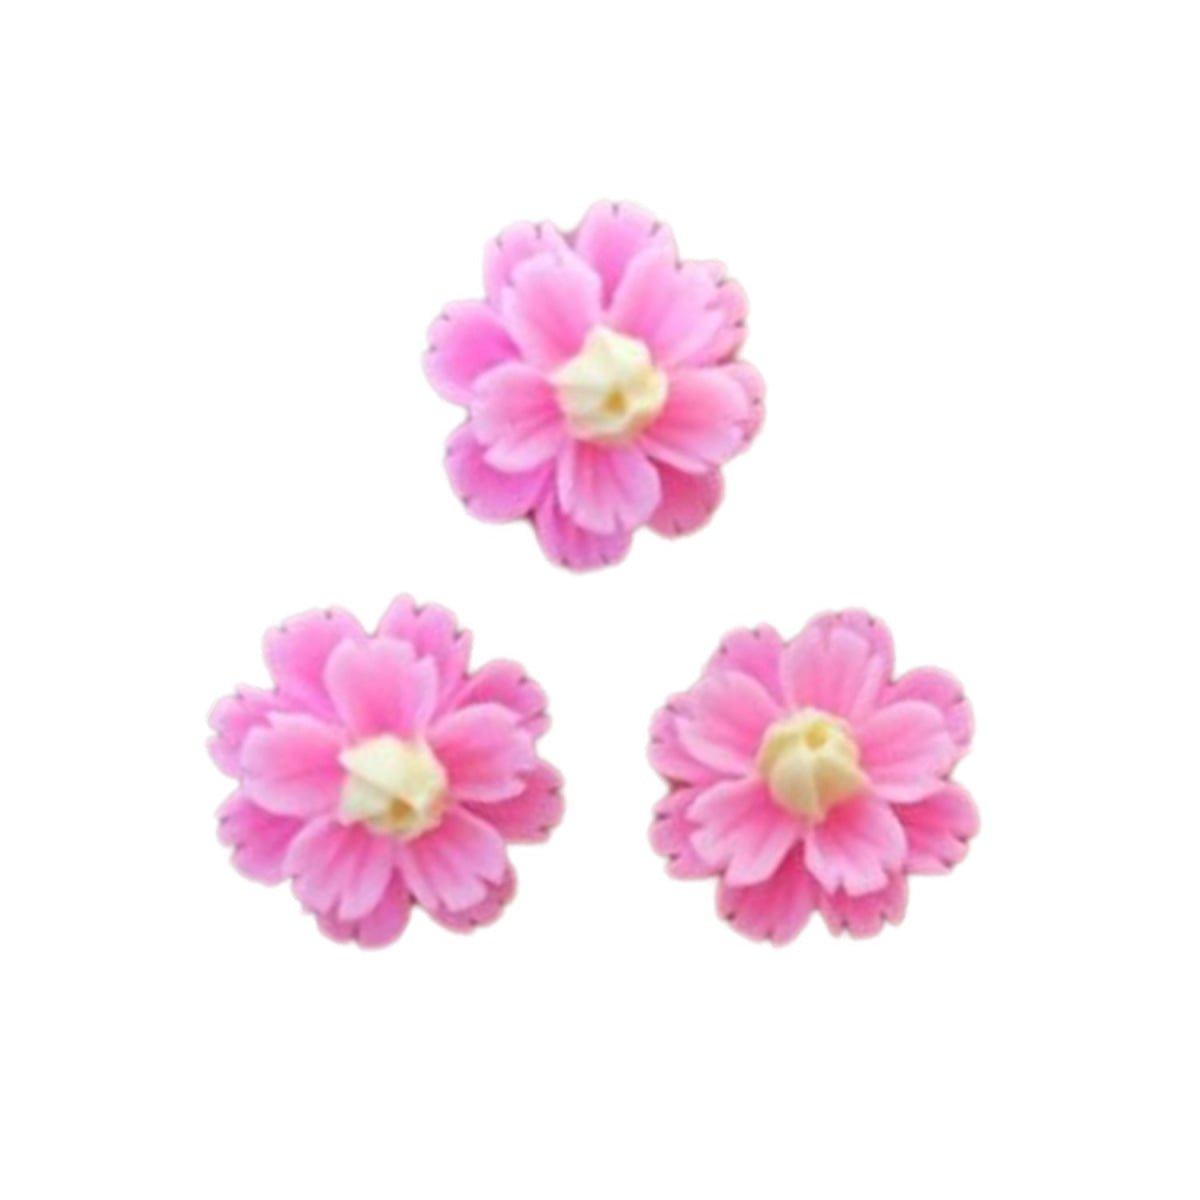 40pcs 3D Flower Flatback Embellishment 13mm Resin Shape Decorations DIY Crafts - Pink - - Asia Sell